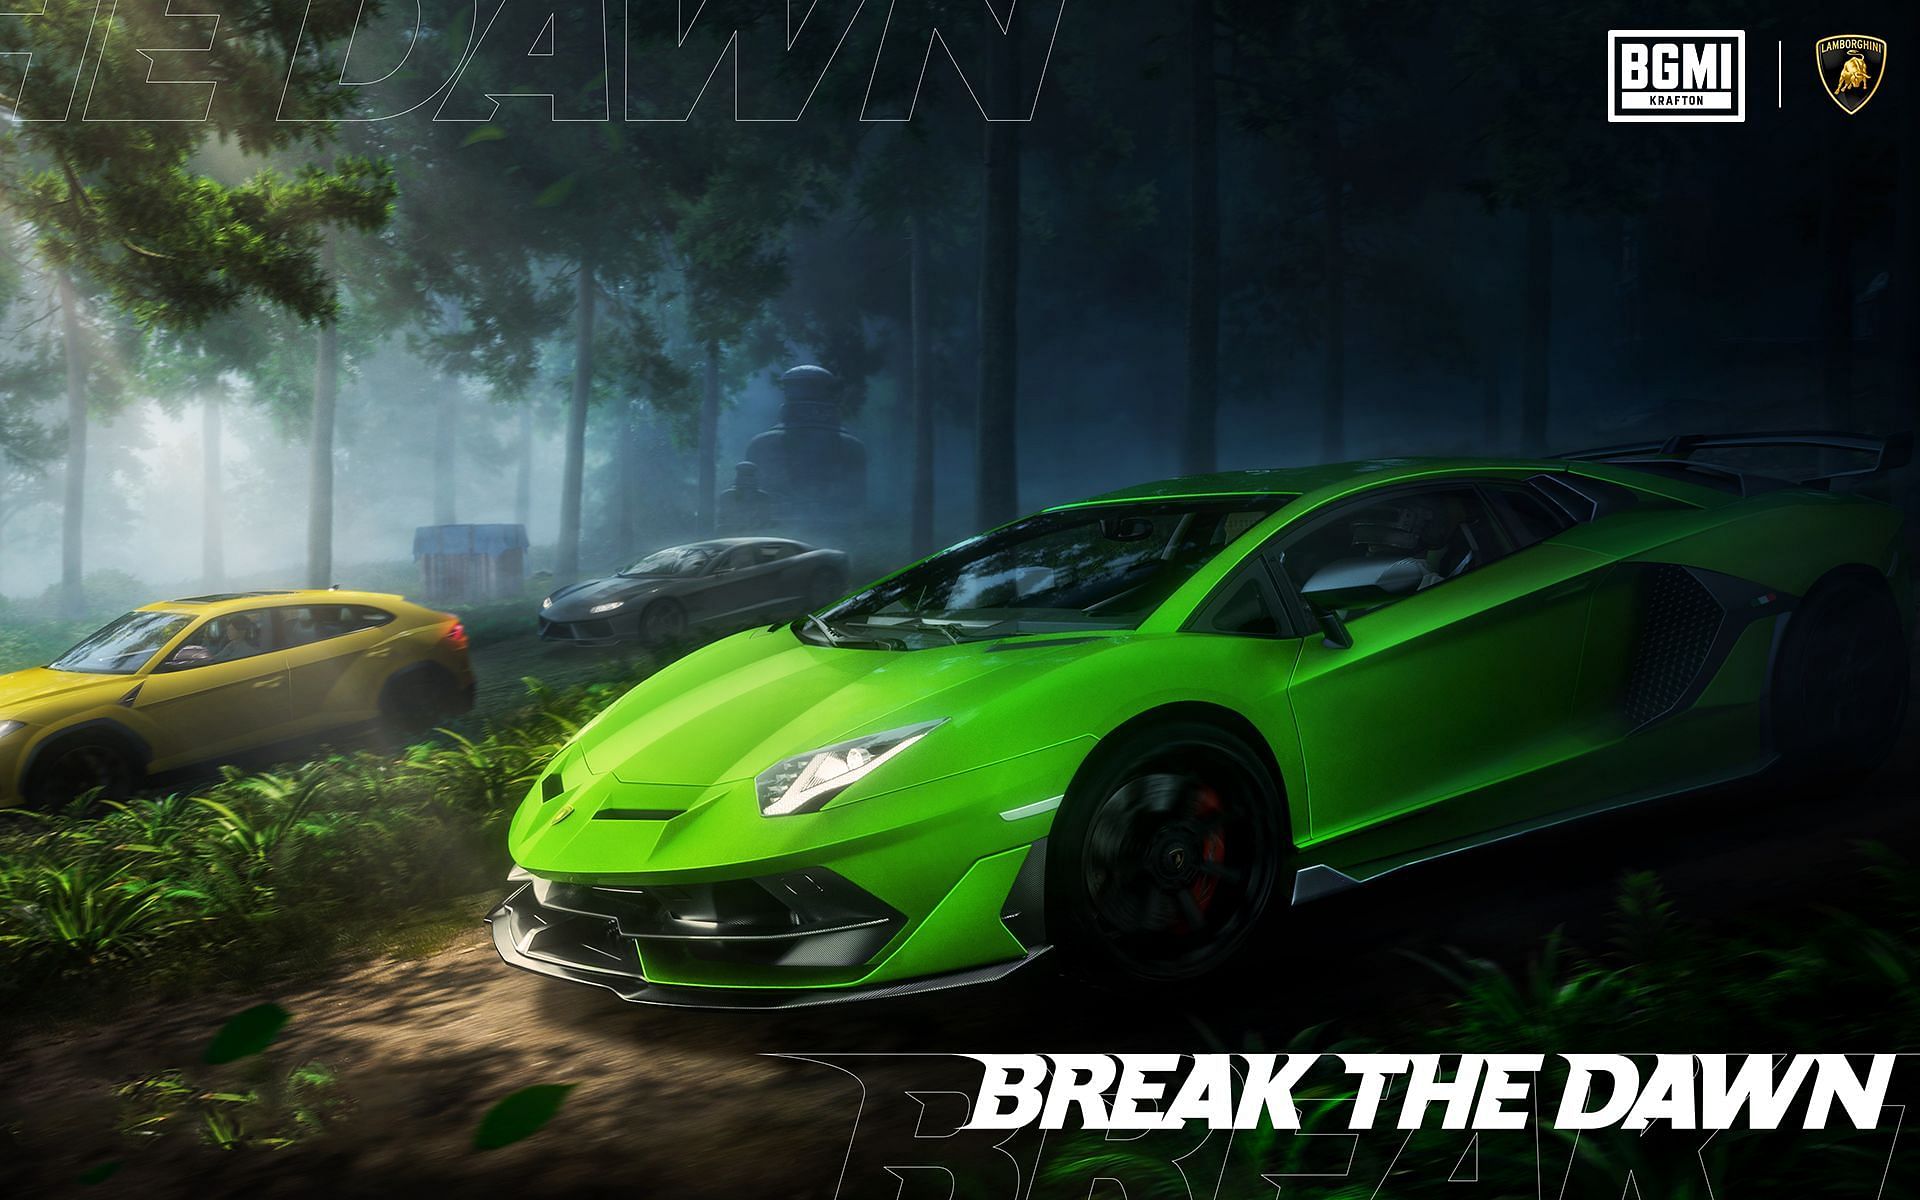 BGMI has announced the collaboration with Lamborghini (Image via Krafton)